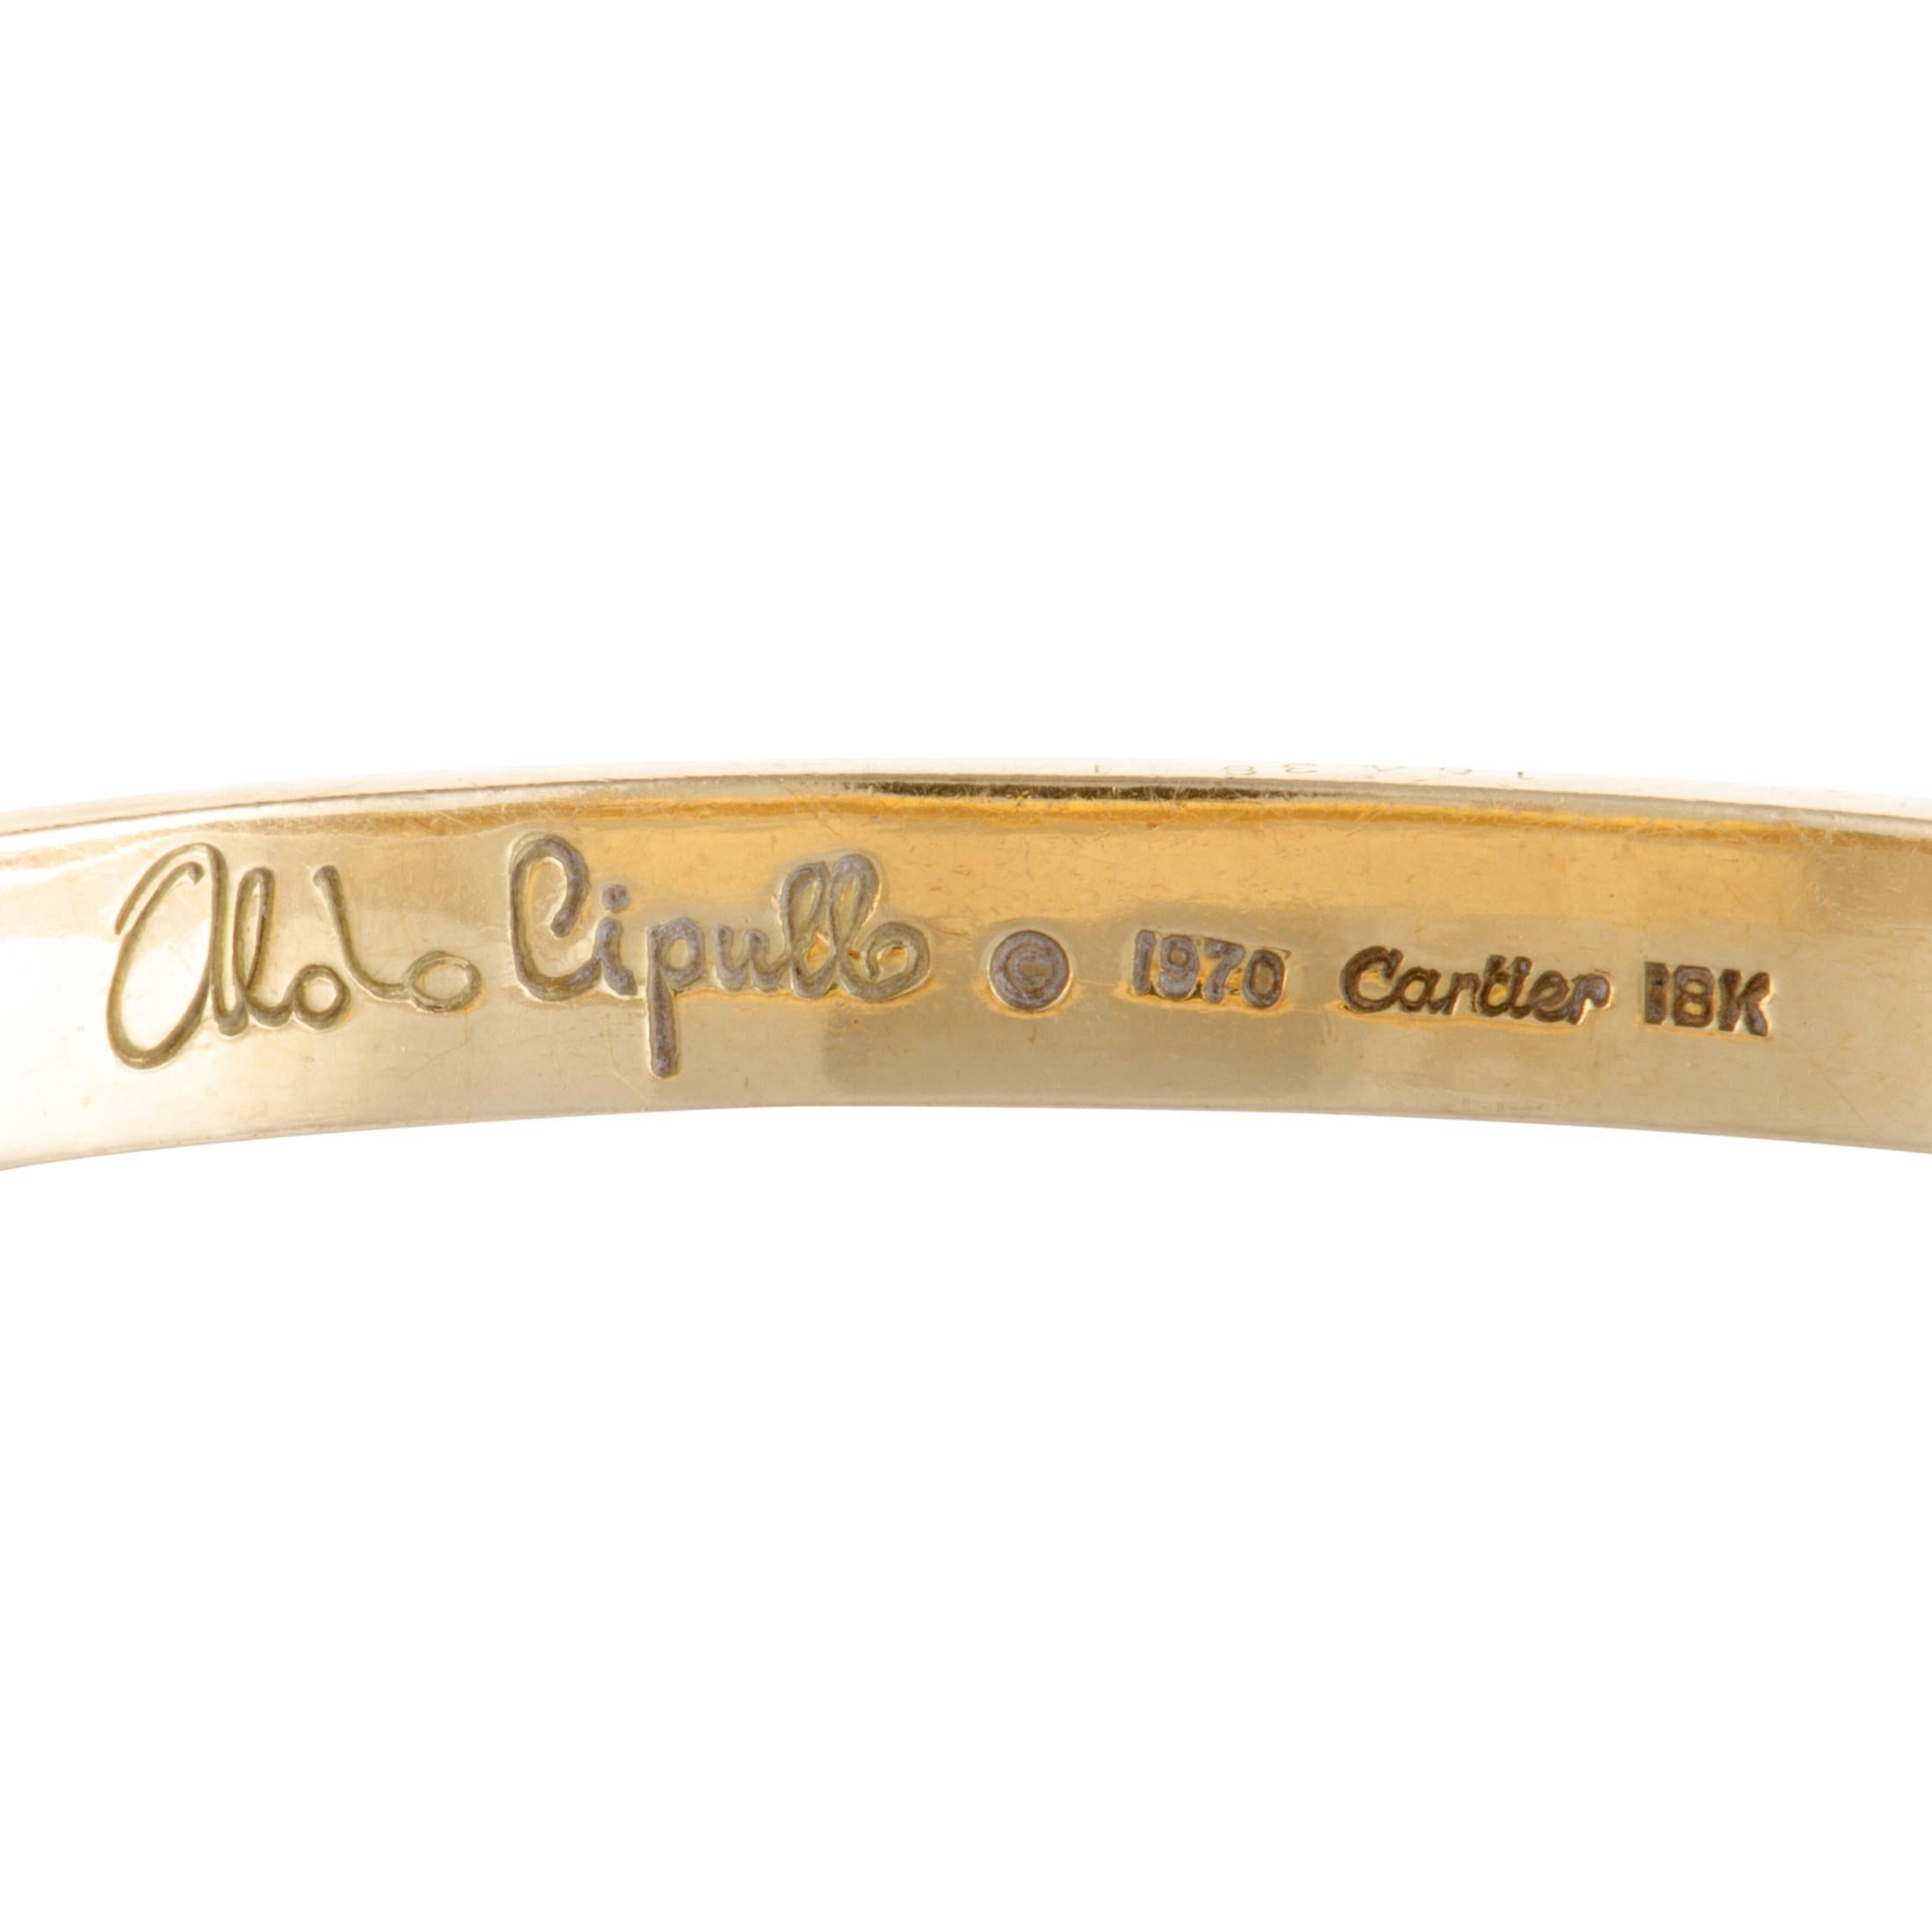 Women's Cartier Aldo Cipullo Circa 1970 18K Yellow Gold Bangle Bracelet and Screwdriver